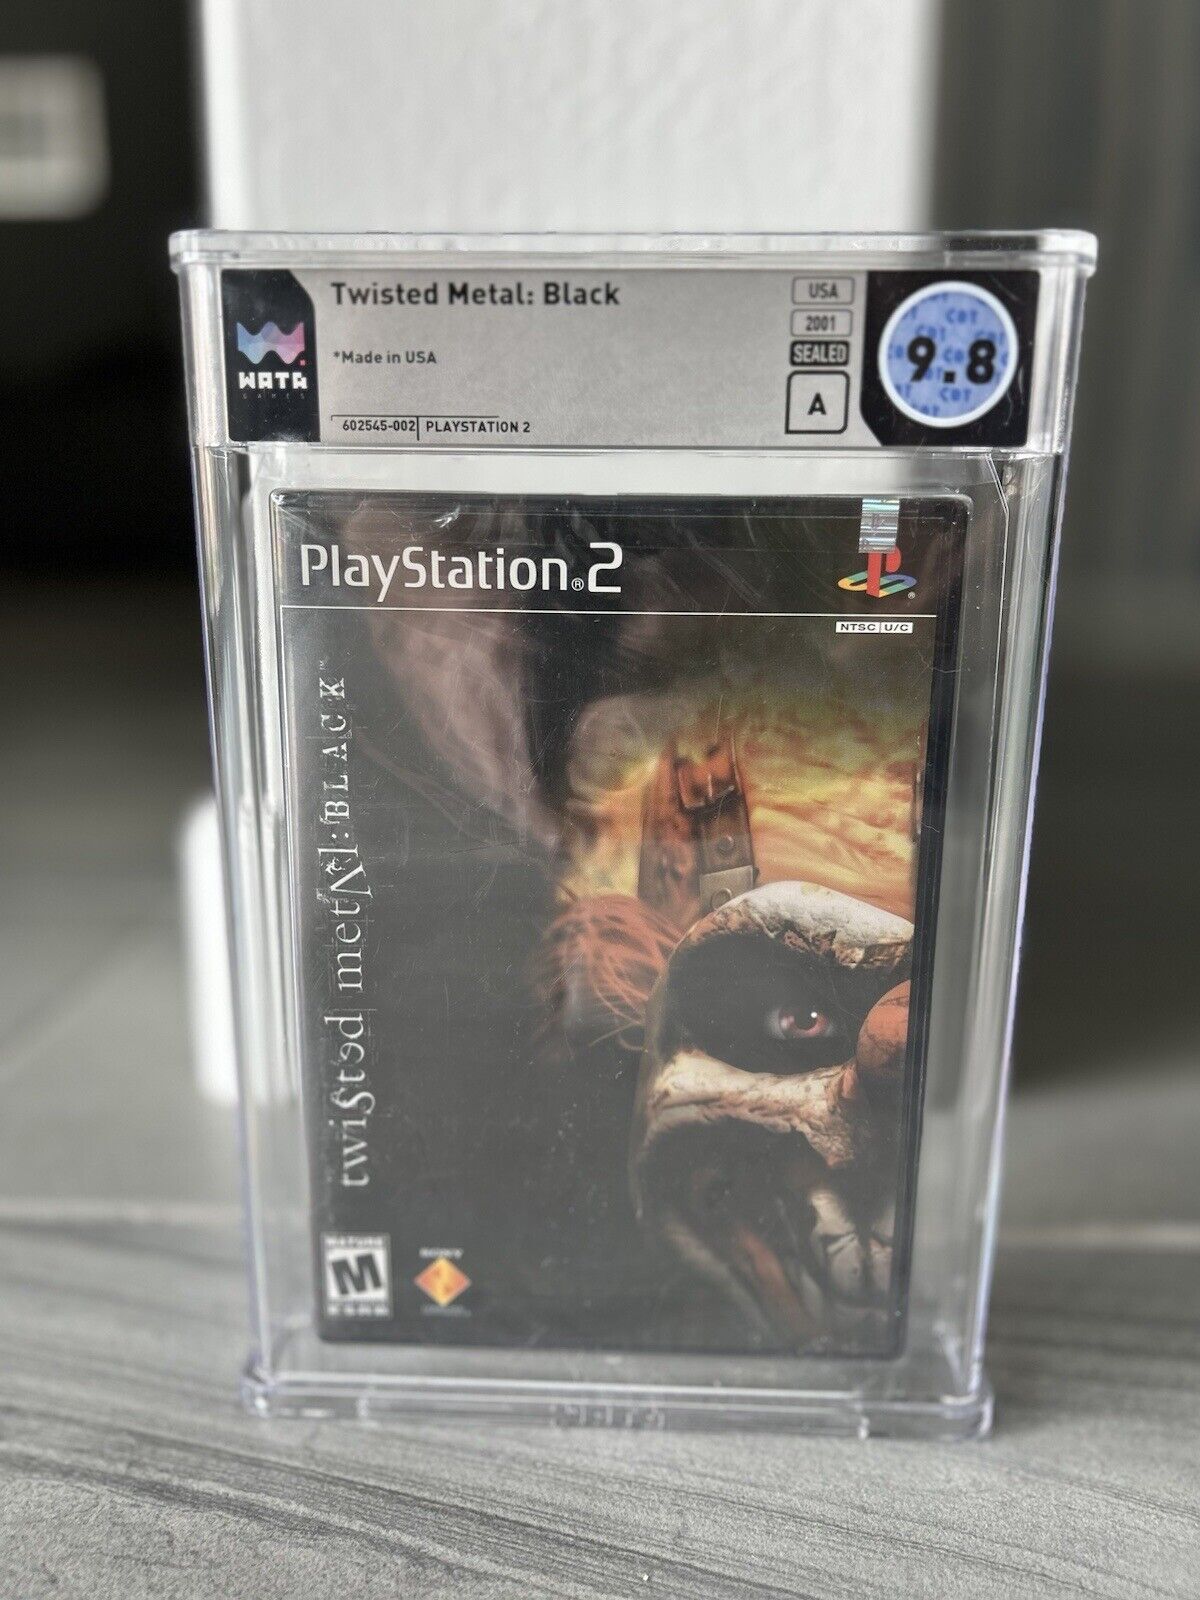 Twisted Metal: Black Playstation 2 PS2 WATA 9.8 A Brand New